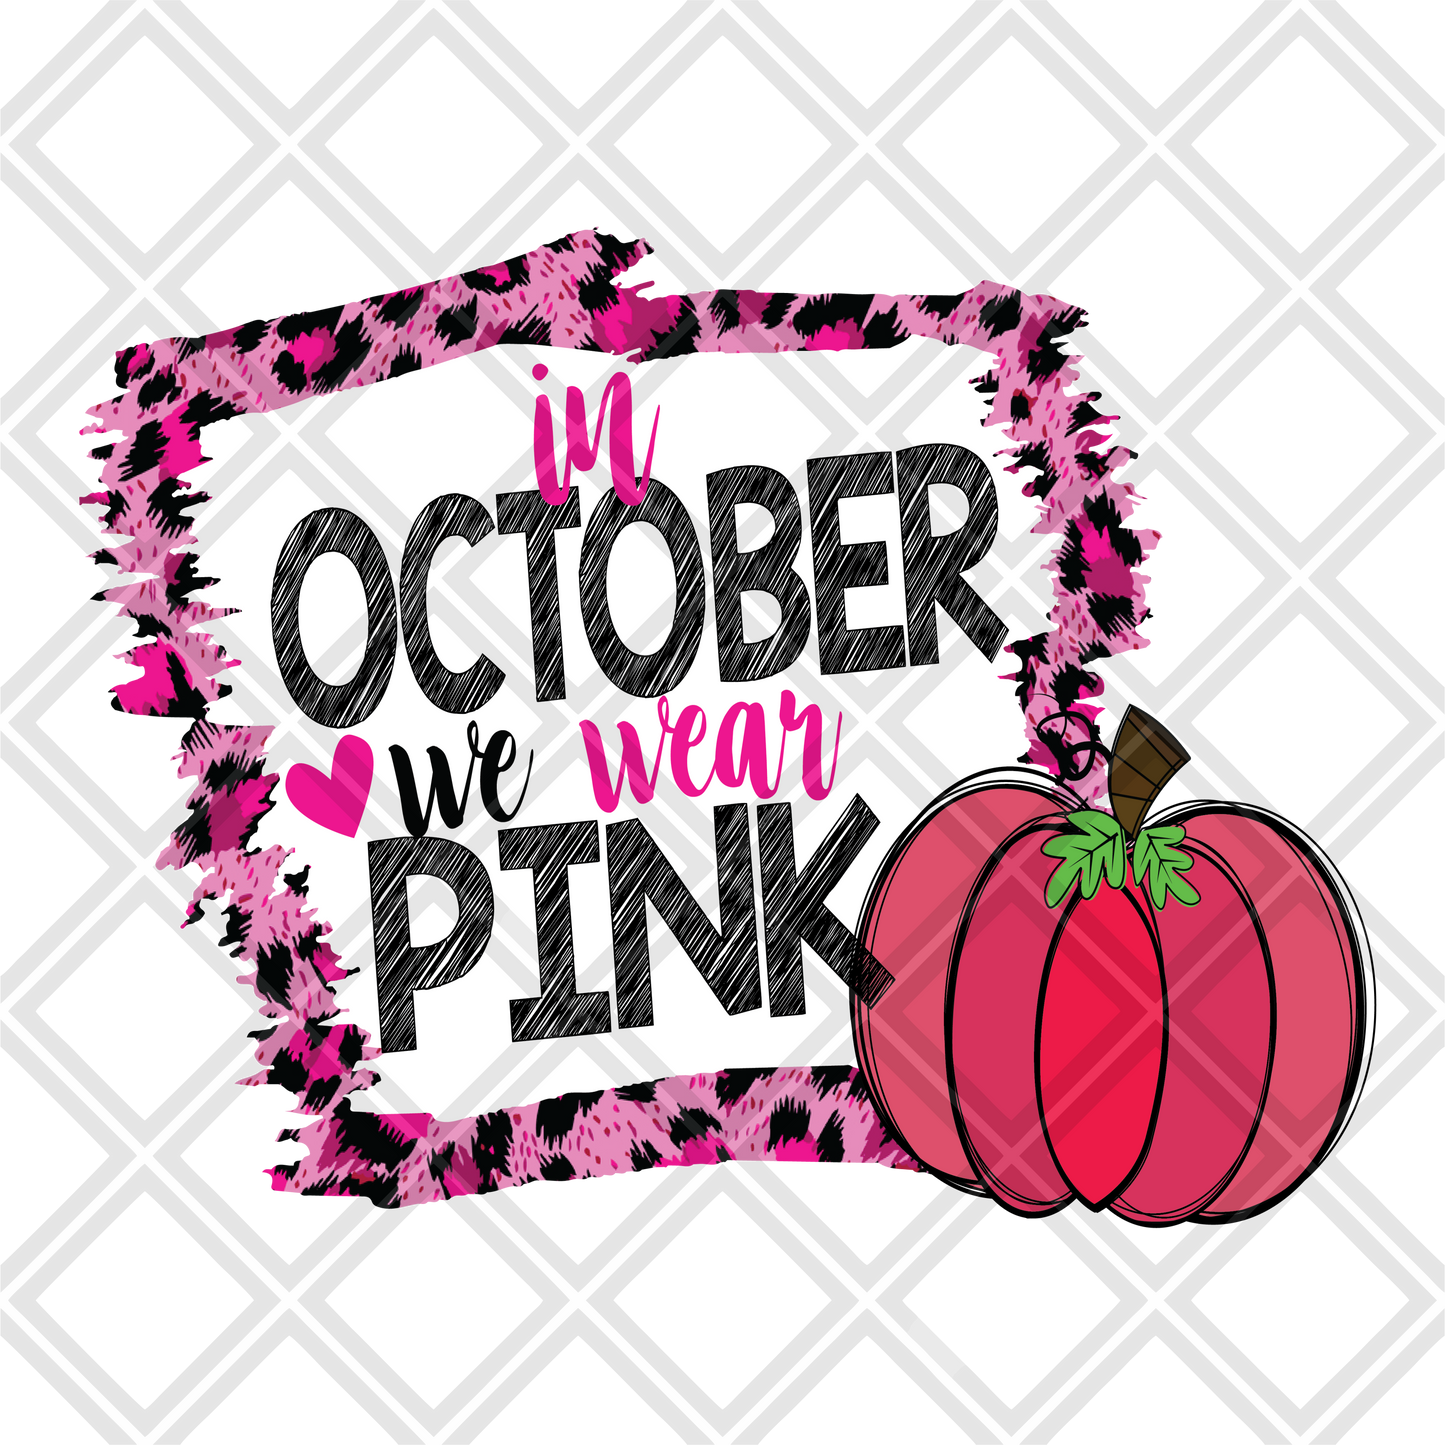 In October we wear pink leopard pumpin DTF TRANSFERPRINT TO ORDER